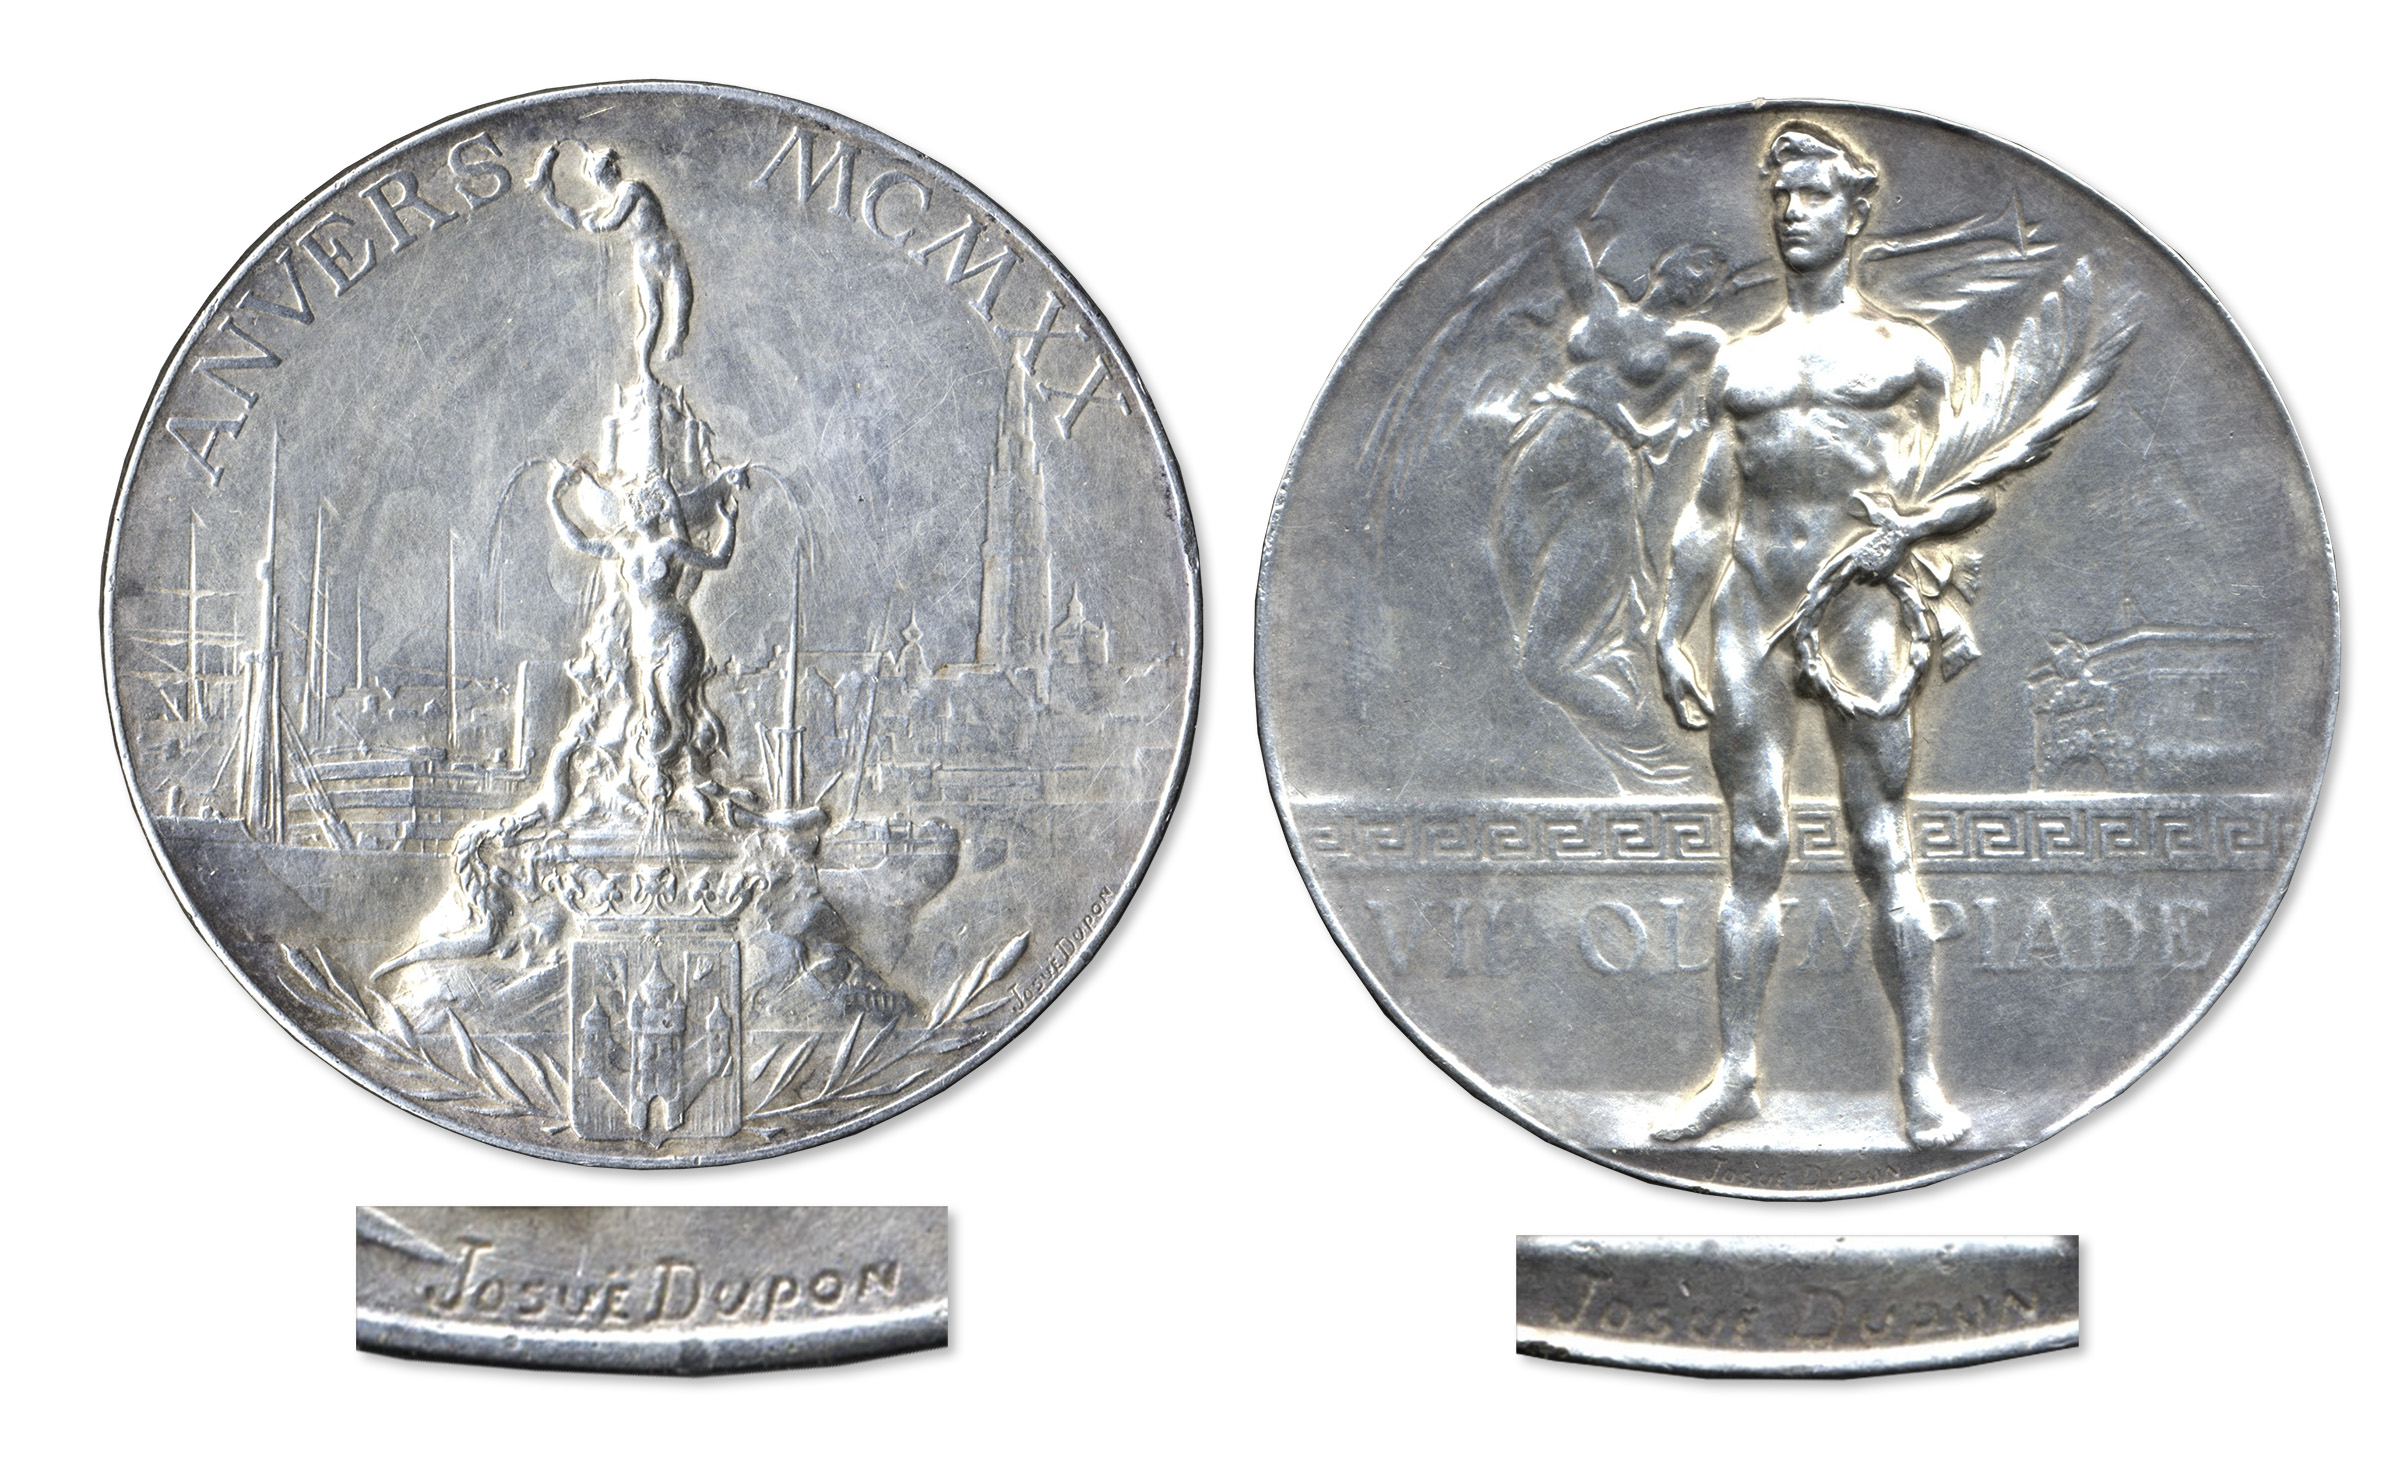 Olympics Memorabilia Silver Olympic Medal From the 1920 Summer Olympics, Held in Antwerp, Belgium